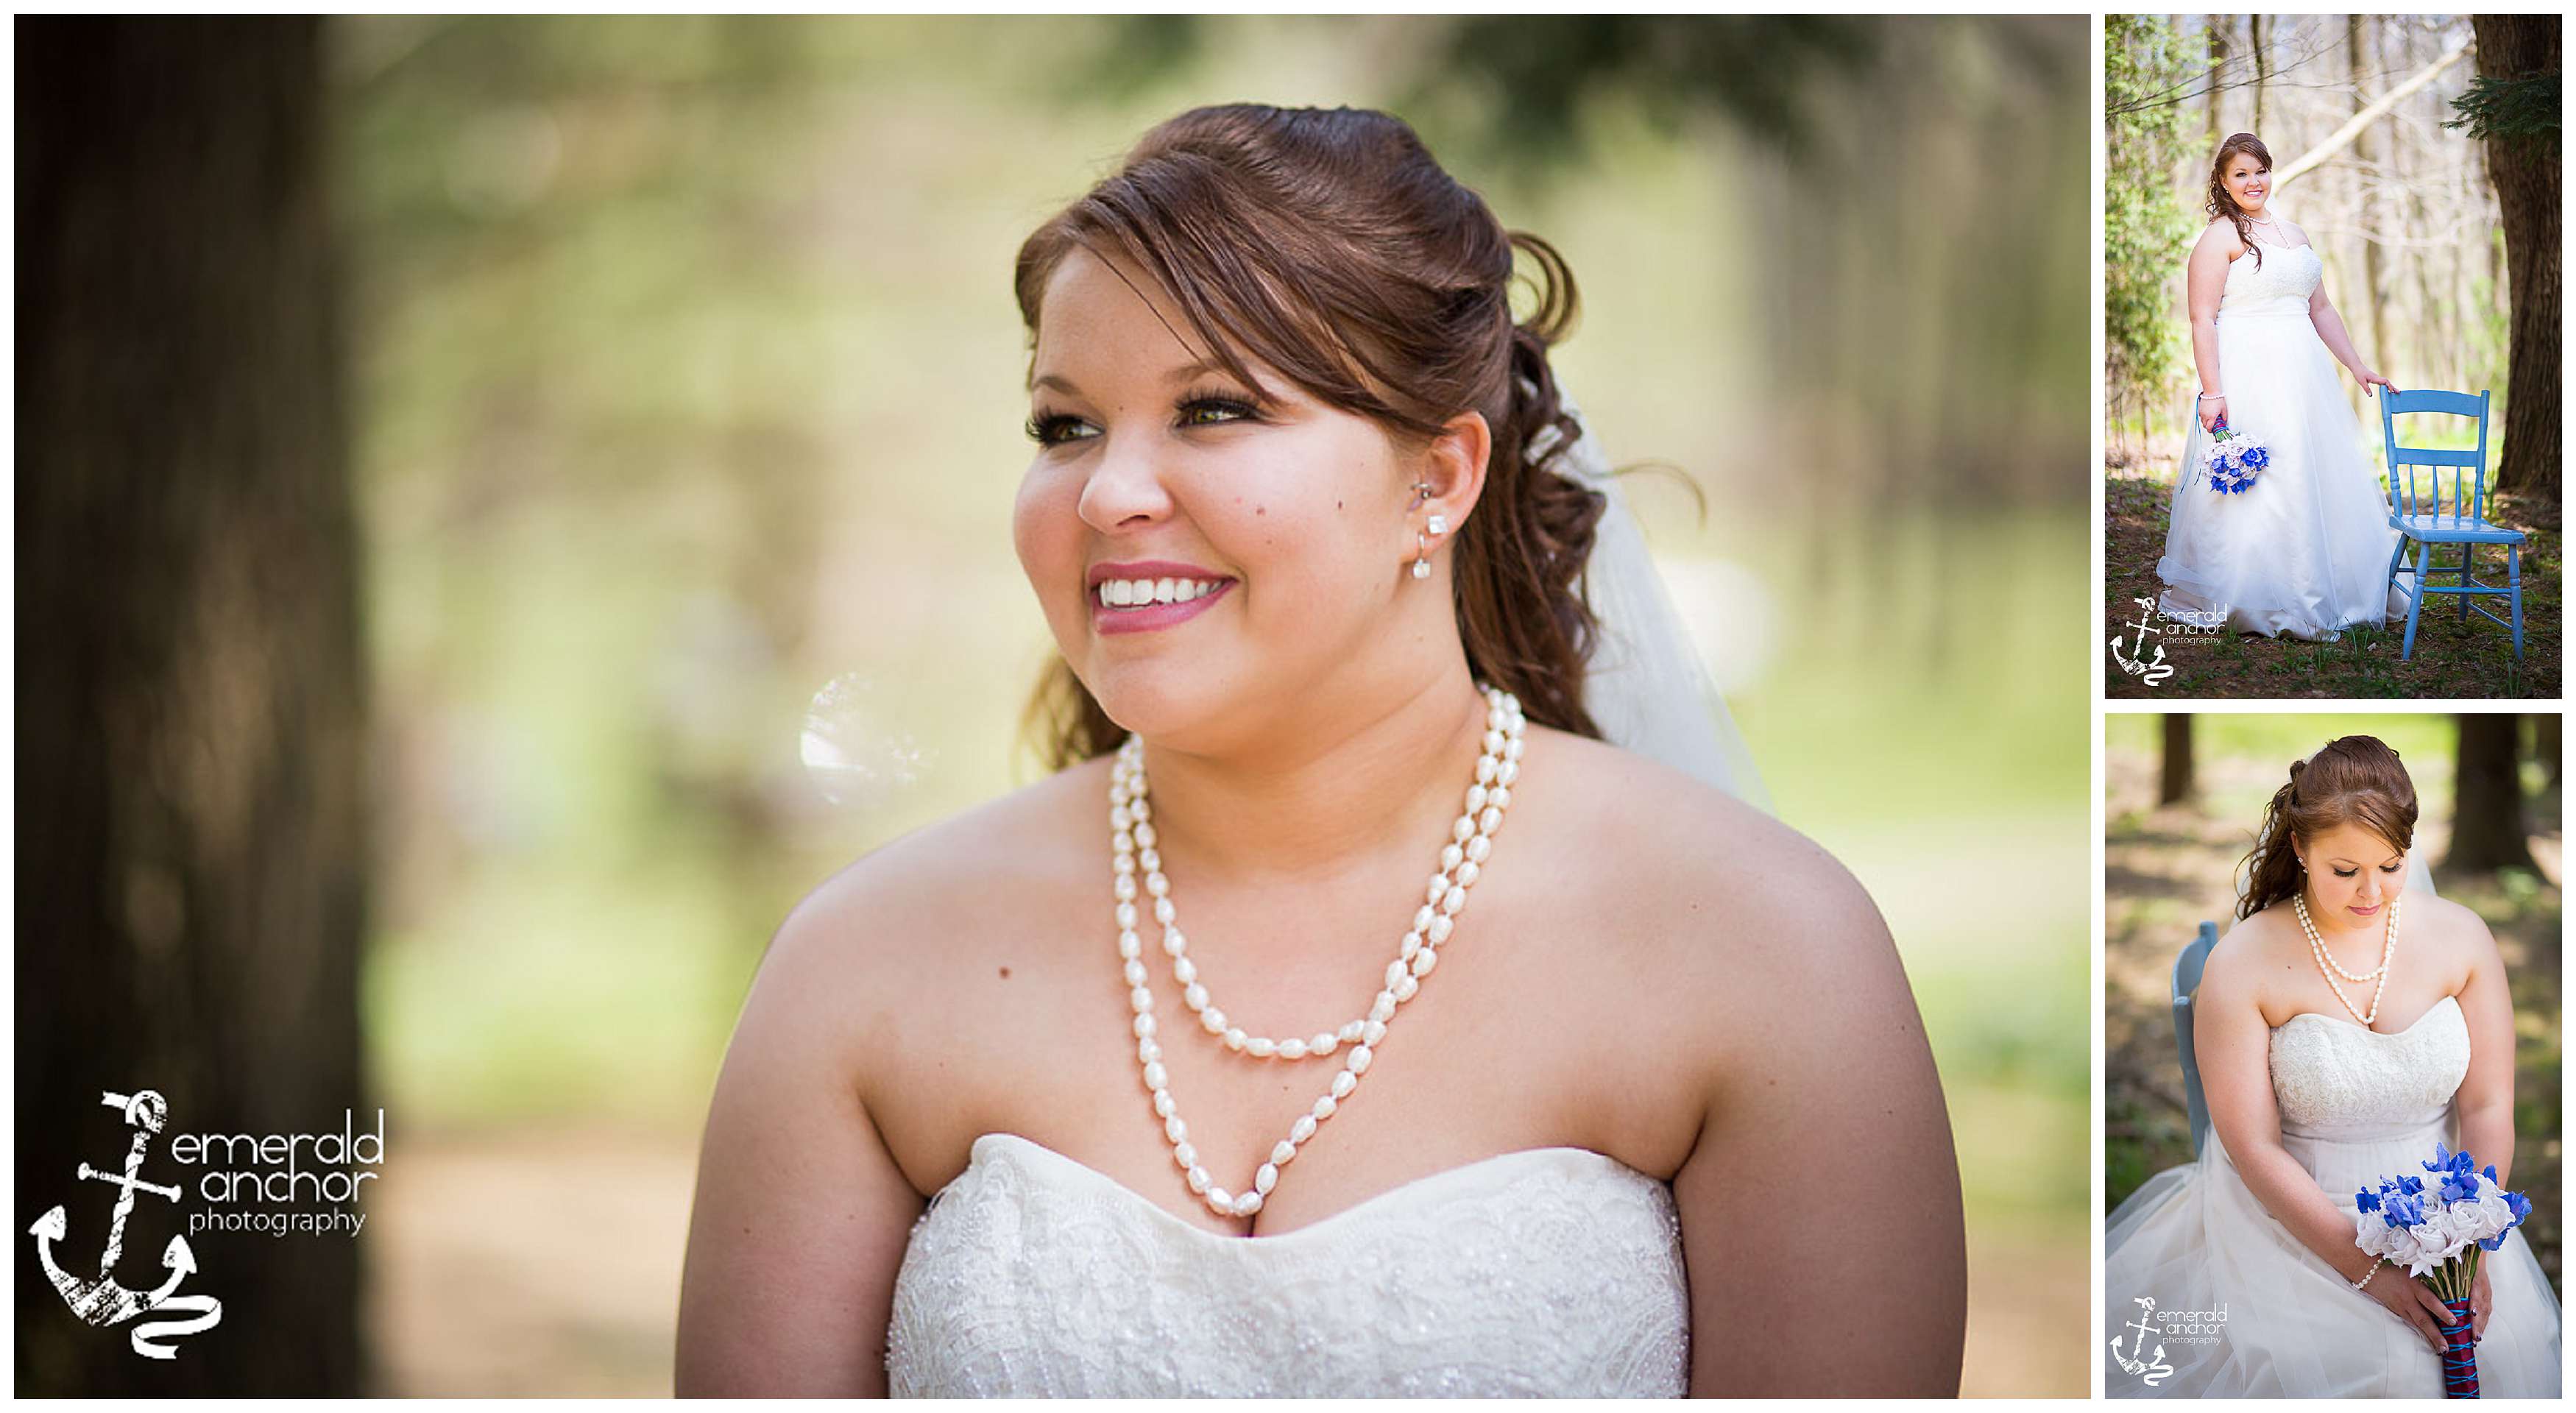 Emerald Anchor Photography Wedding Photography (35)